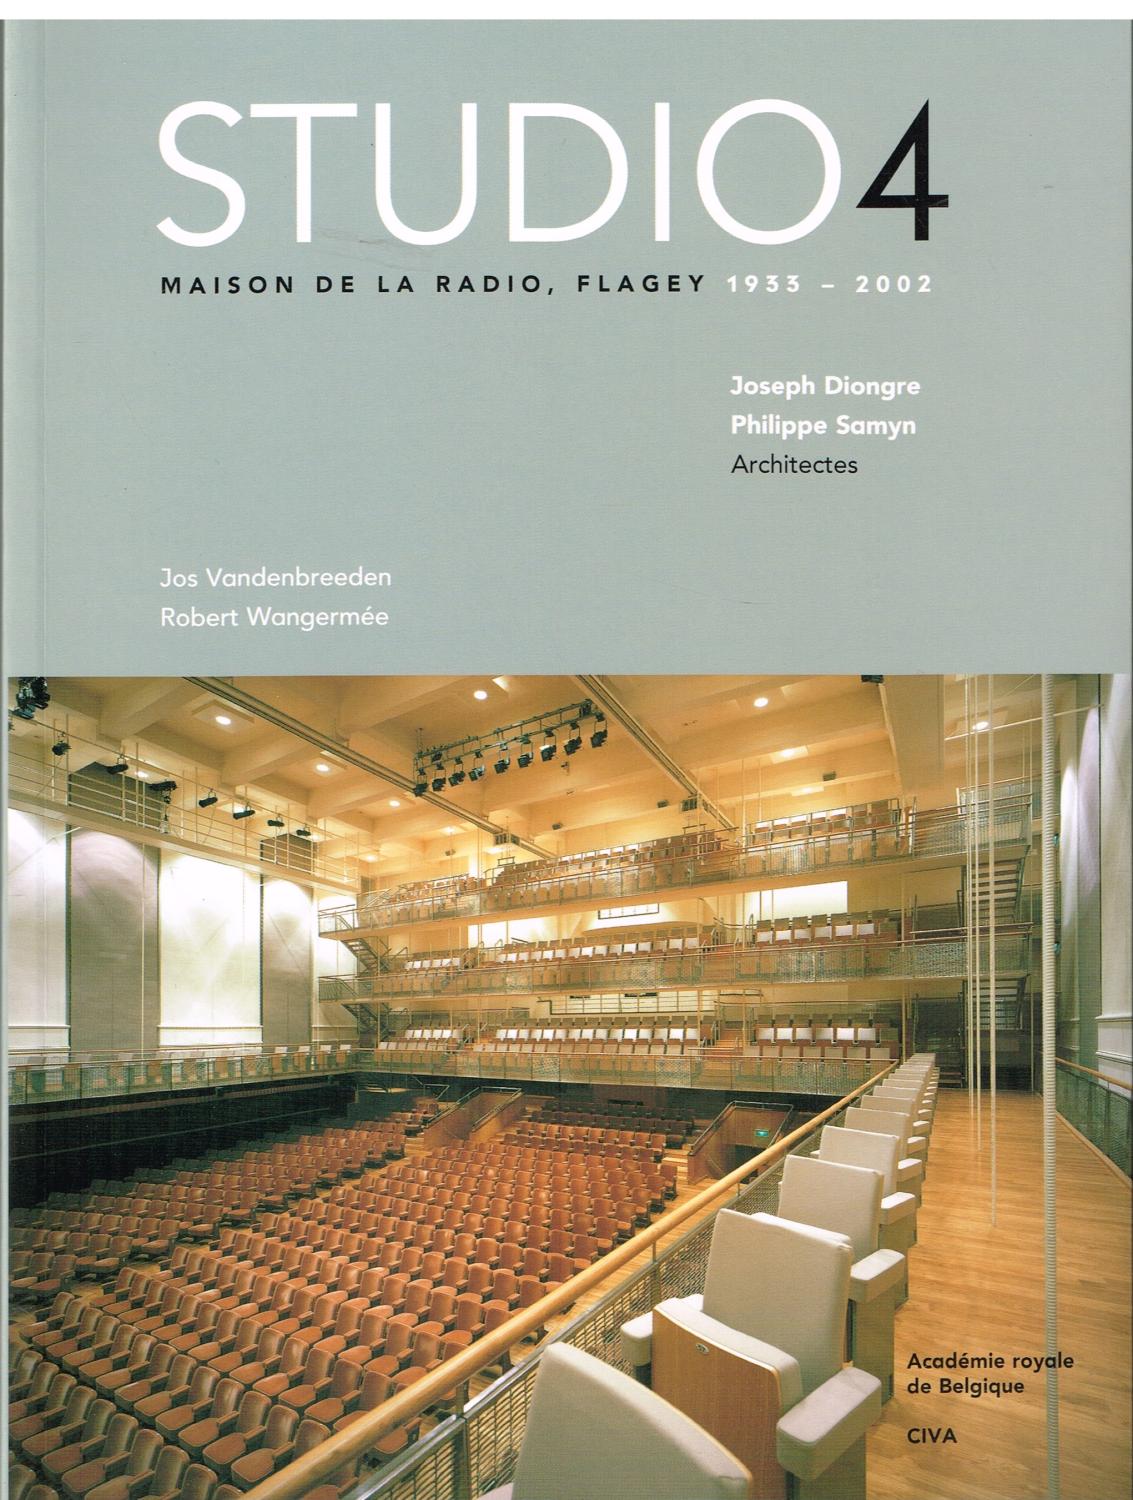 Studio 4: omroepgebouw, Flagey 1933-2002 : historiek en herontwikkeling